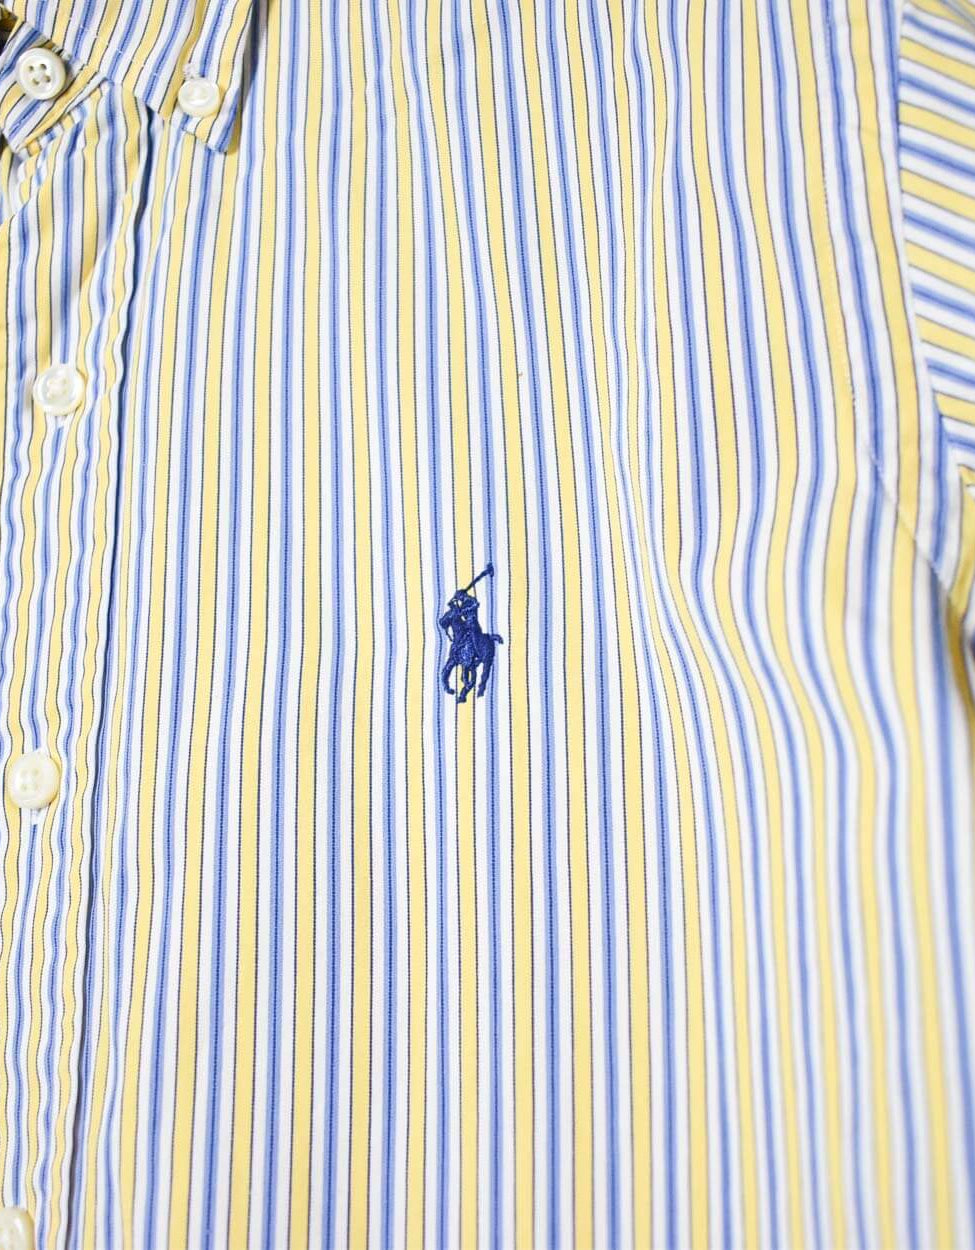 Stone Polo Ralph Lauren Shirt - Small